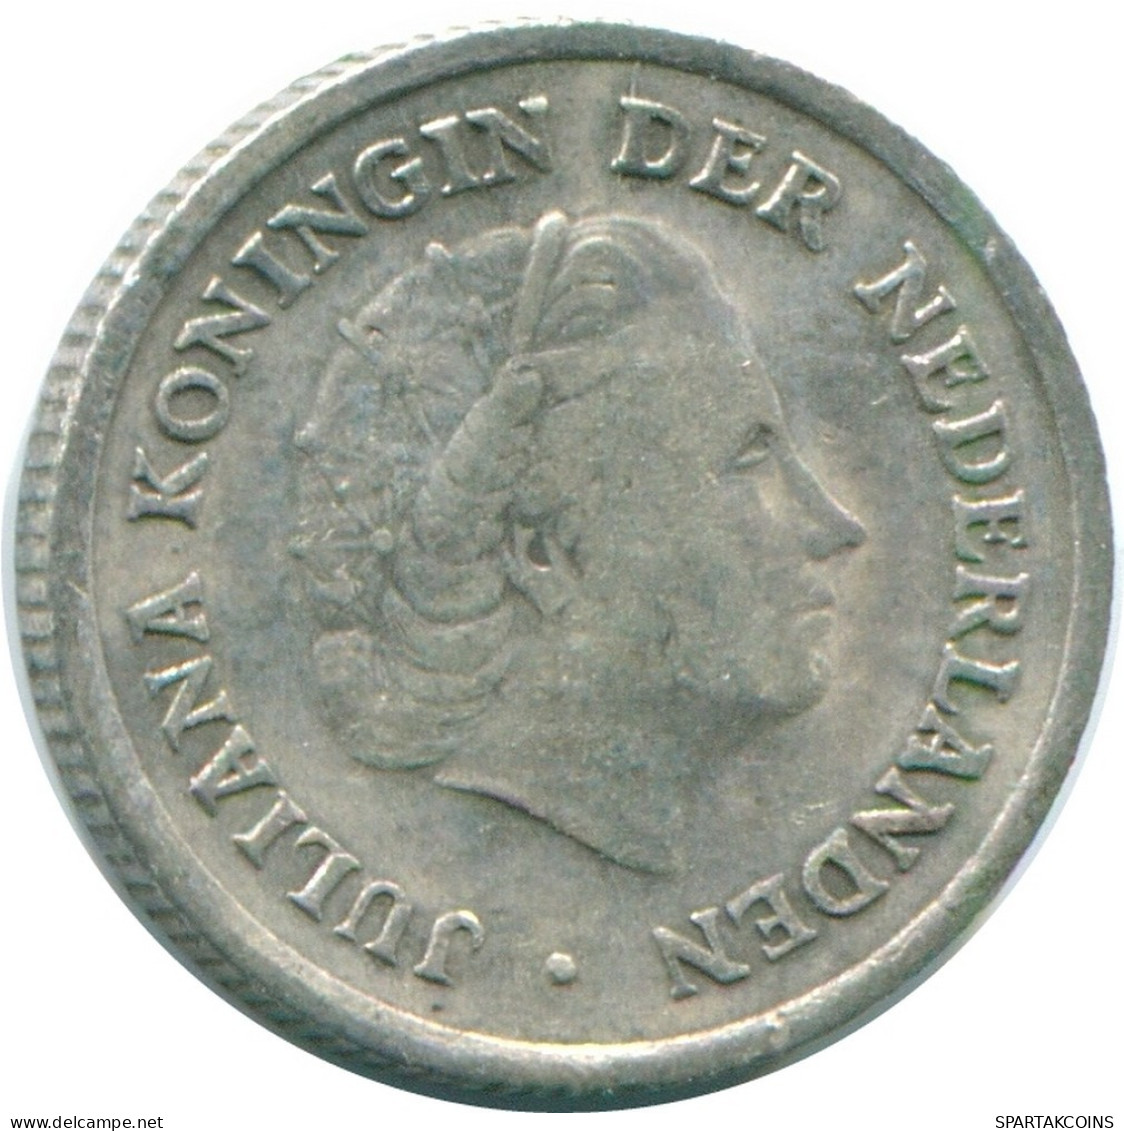 1/10 GULDEN 1959 NETHERLANDS ANTILLES SILVER Colonial Coin #NL12213.3.U.A - Nederlandse Antillen